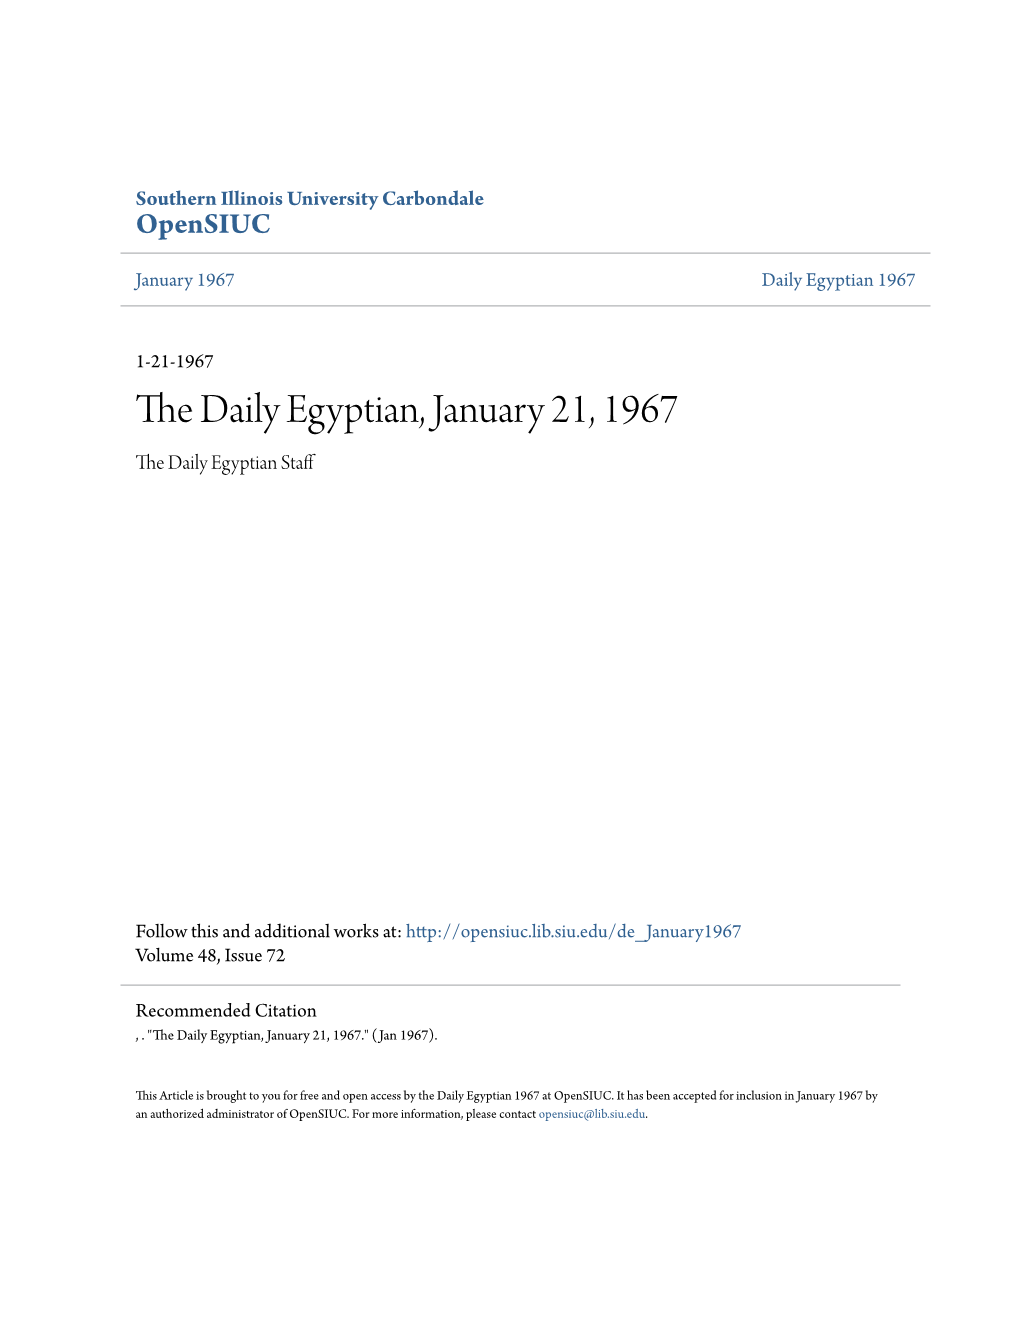 The Daily Egyptian, January 21, 1967